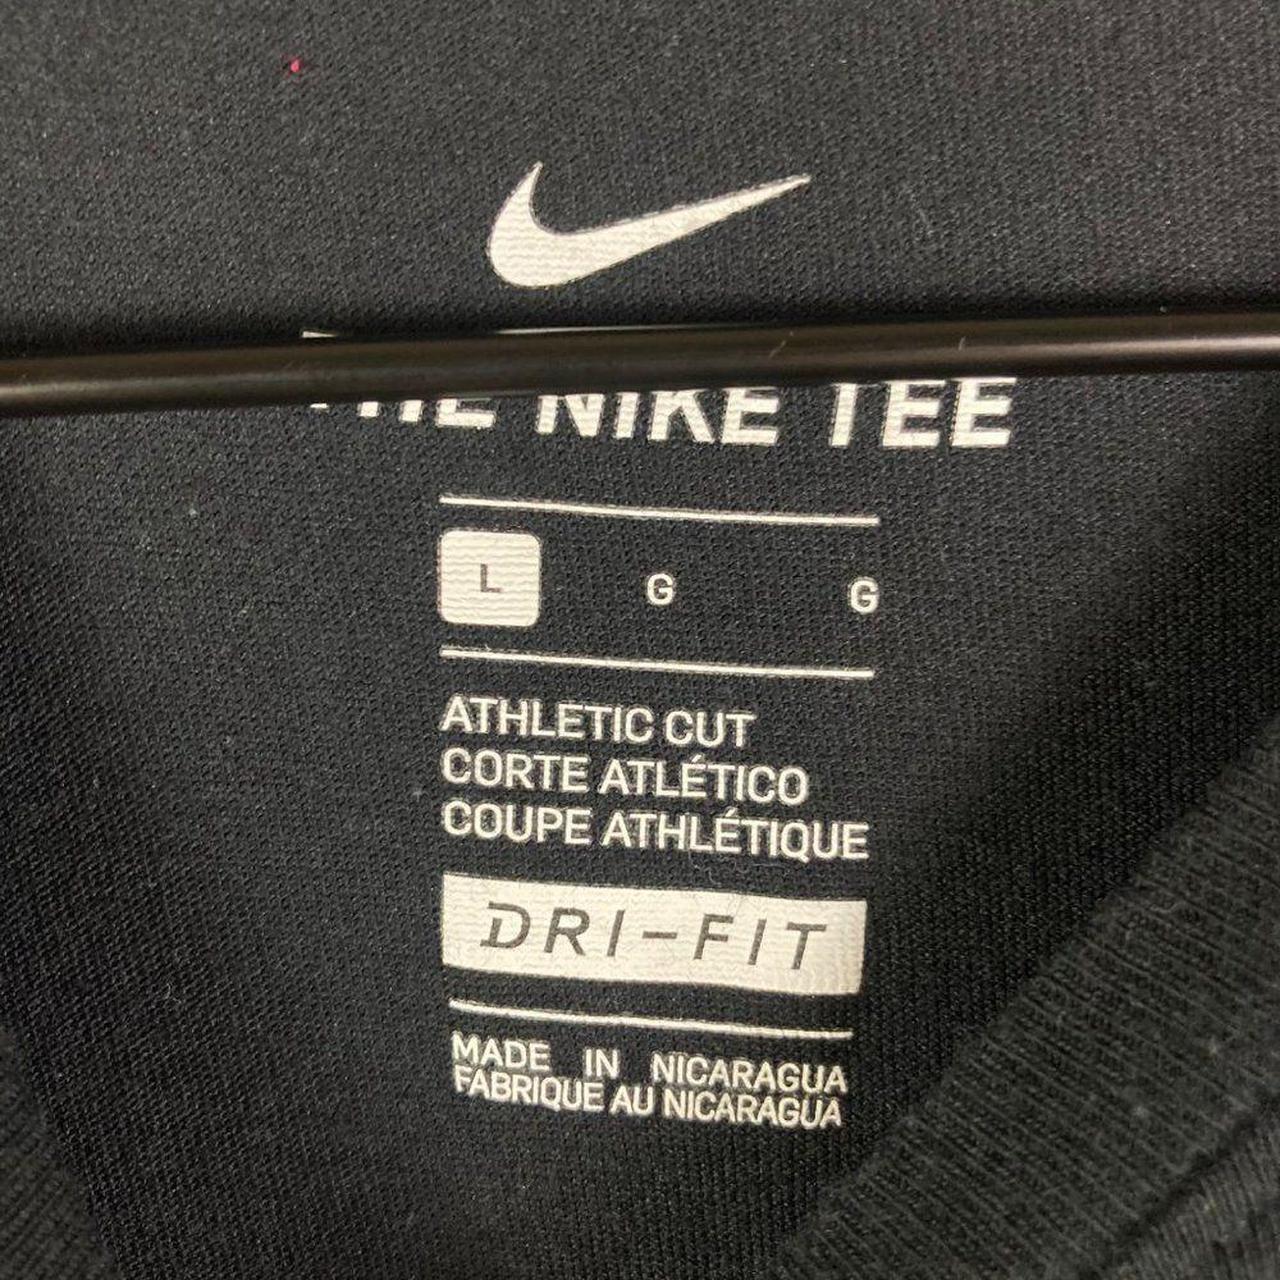 Chicago White Sox Nike Dri-Fit Script T-Shirt. Men's - Depop